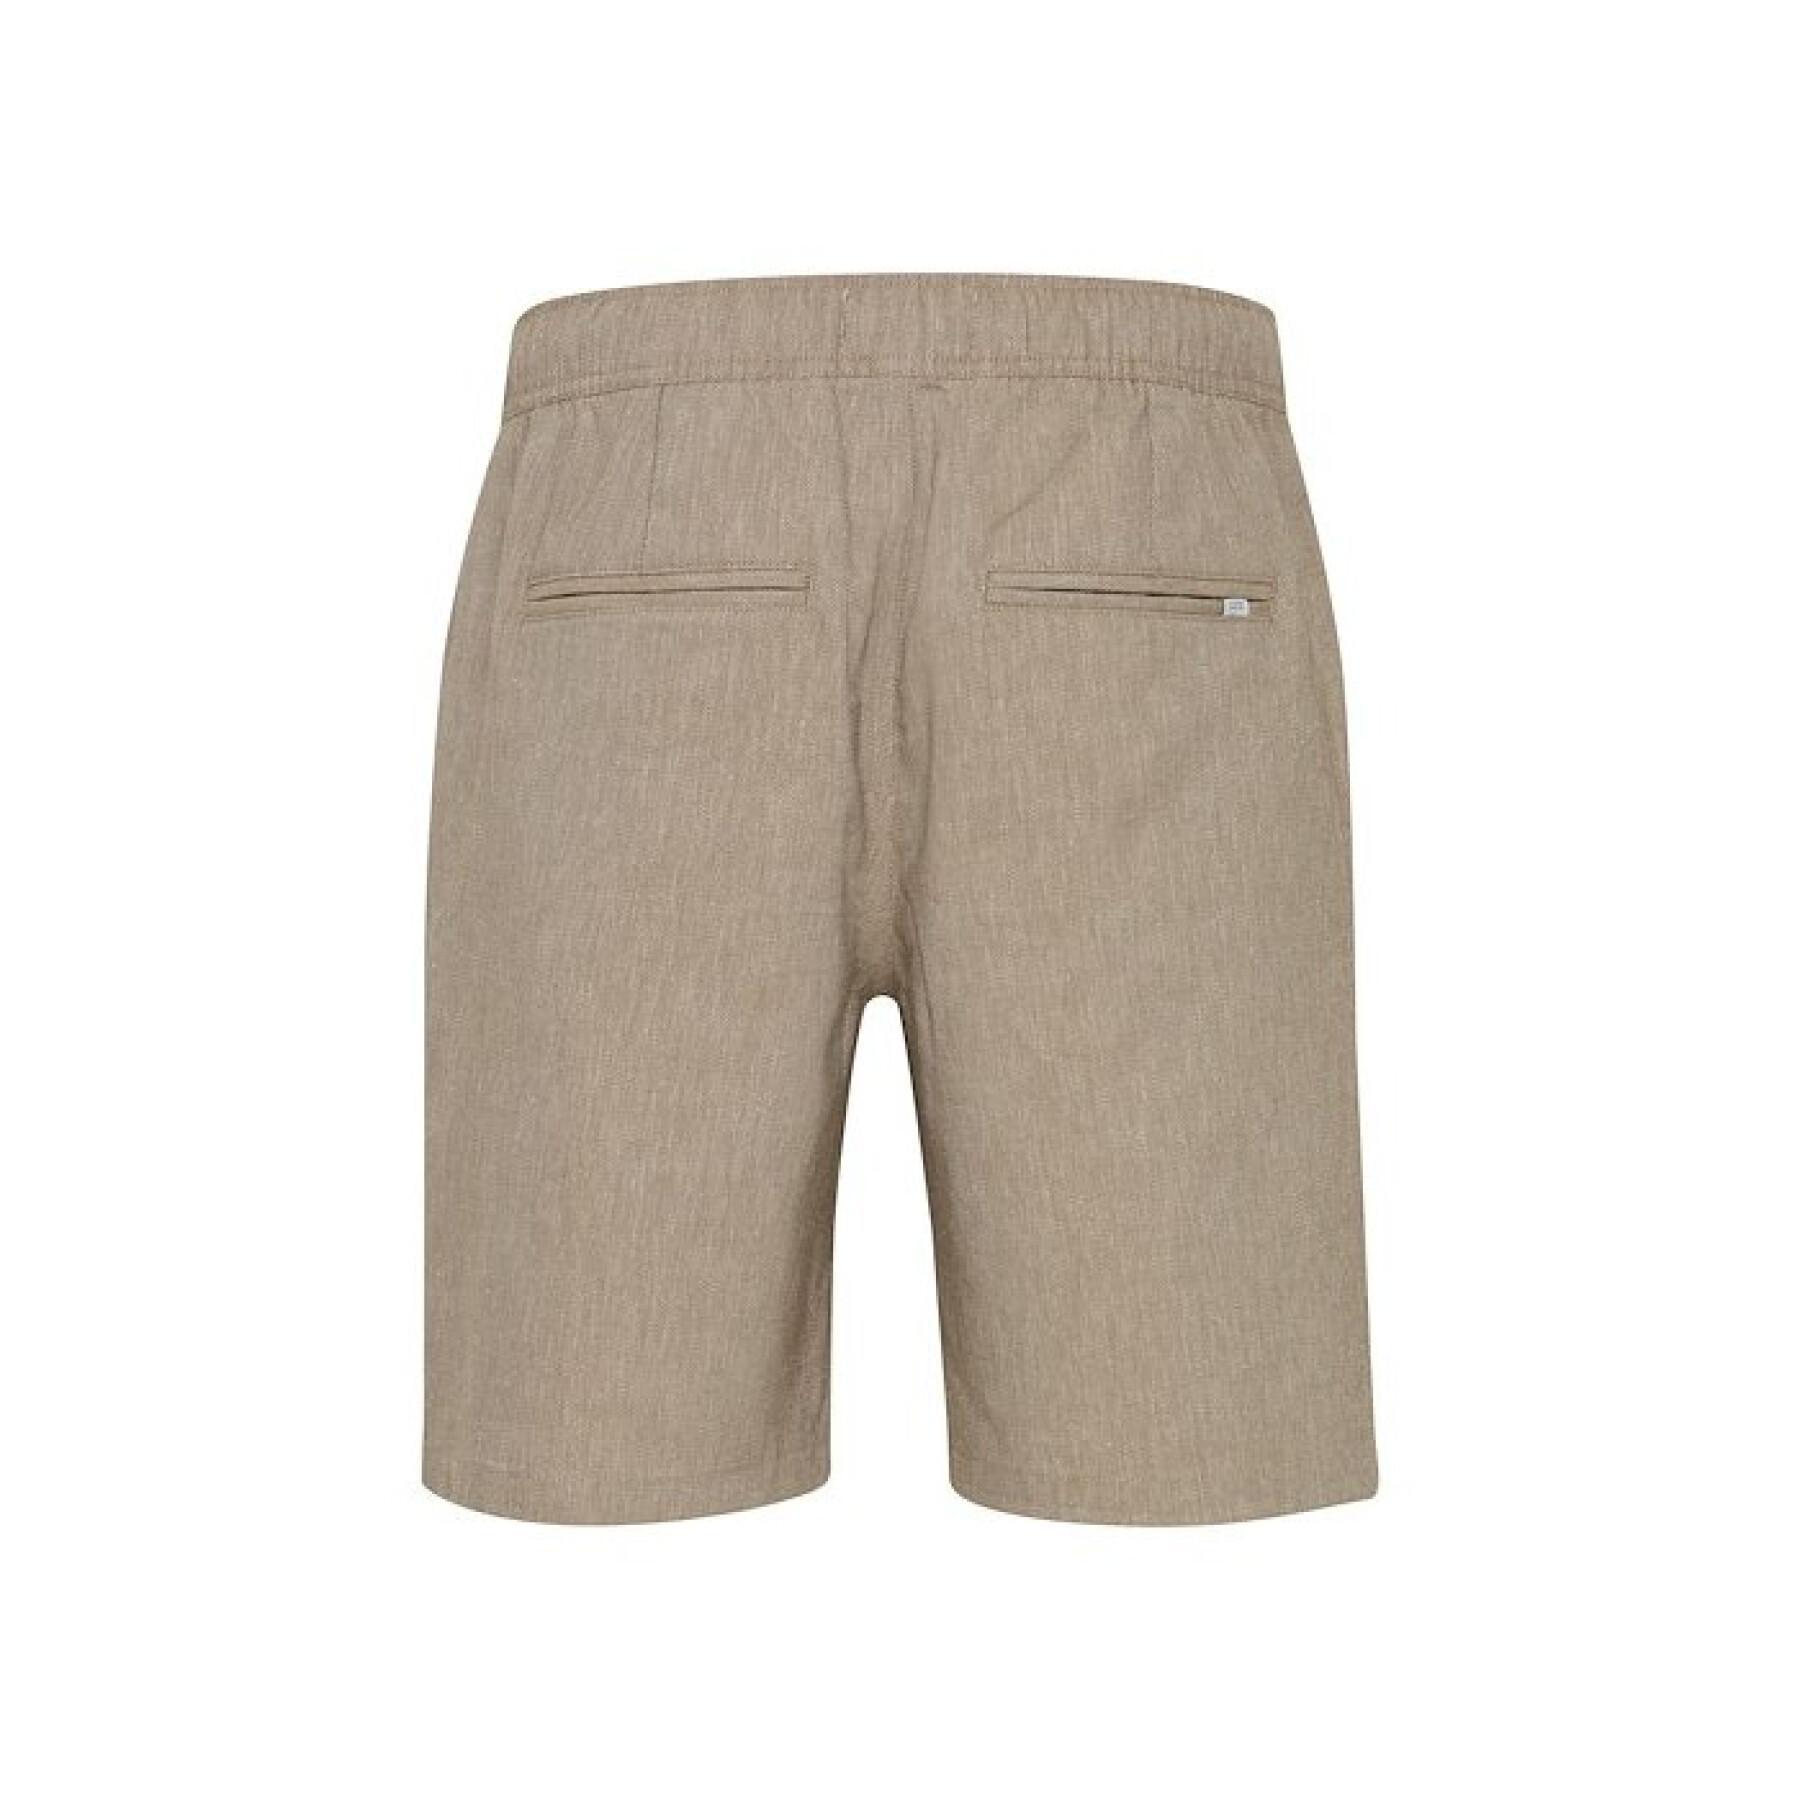 Mixed linen shorts Casual Friday Phelix 0066